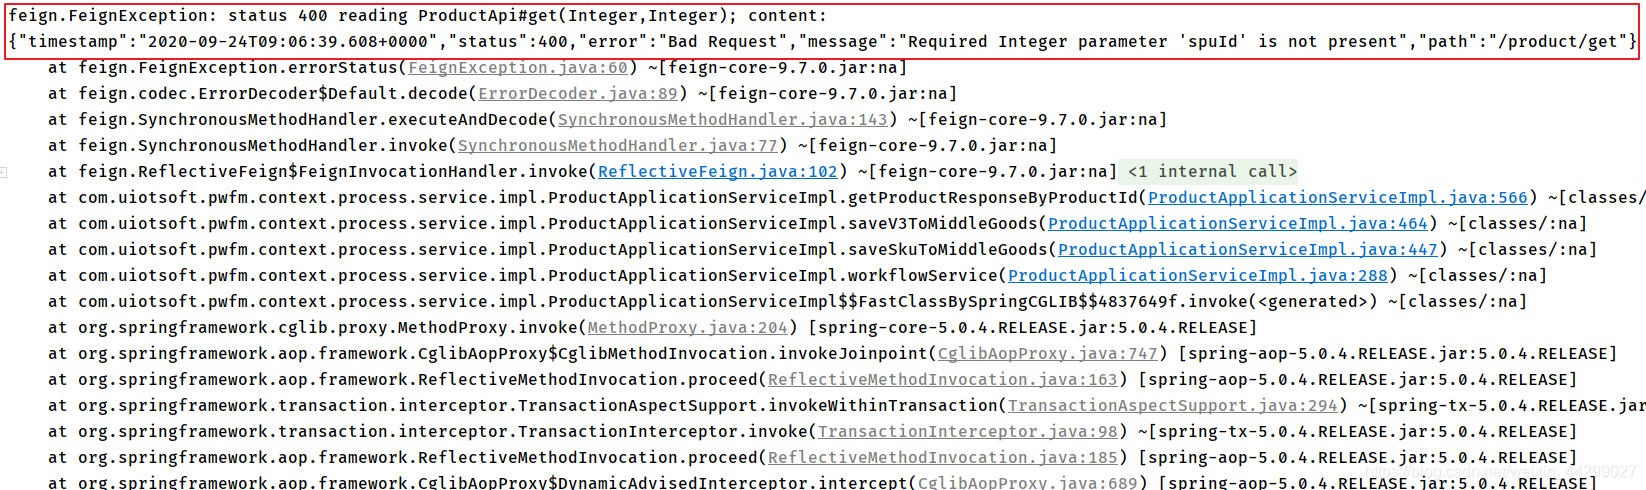 【Java异常】feign.FeignException: status 400 reading xxx#xxxx(String)； content: